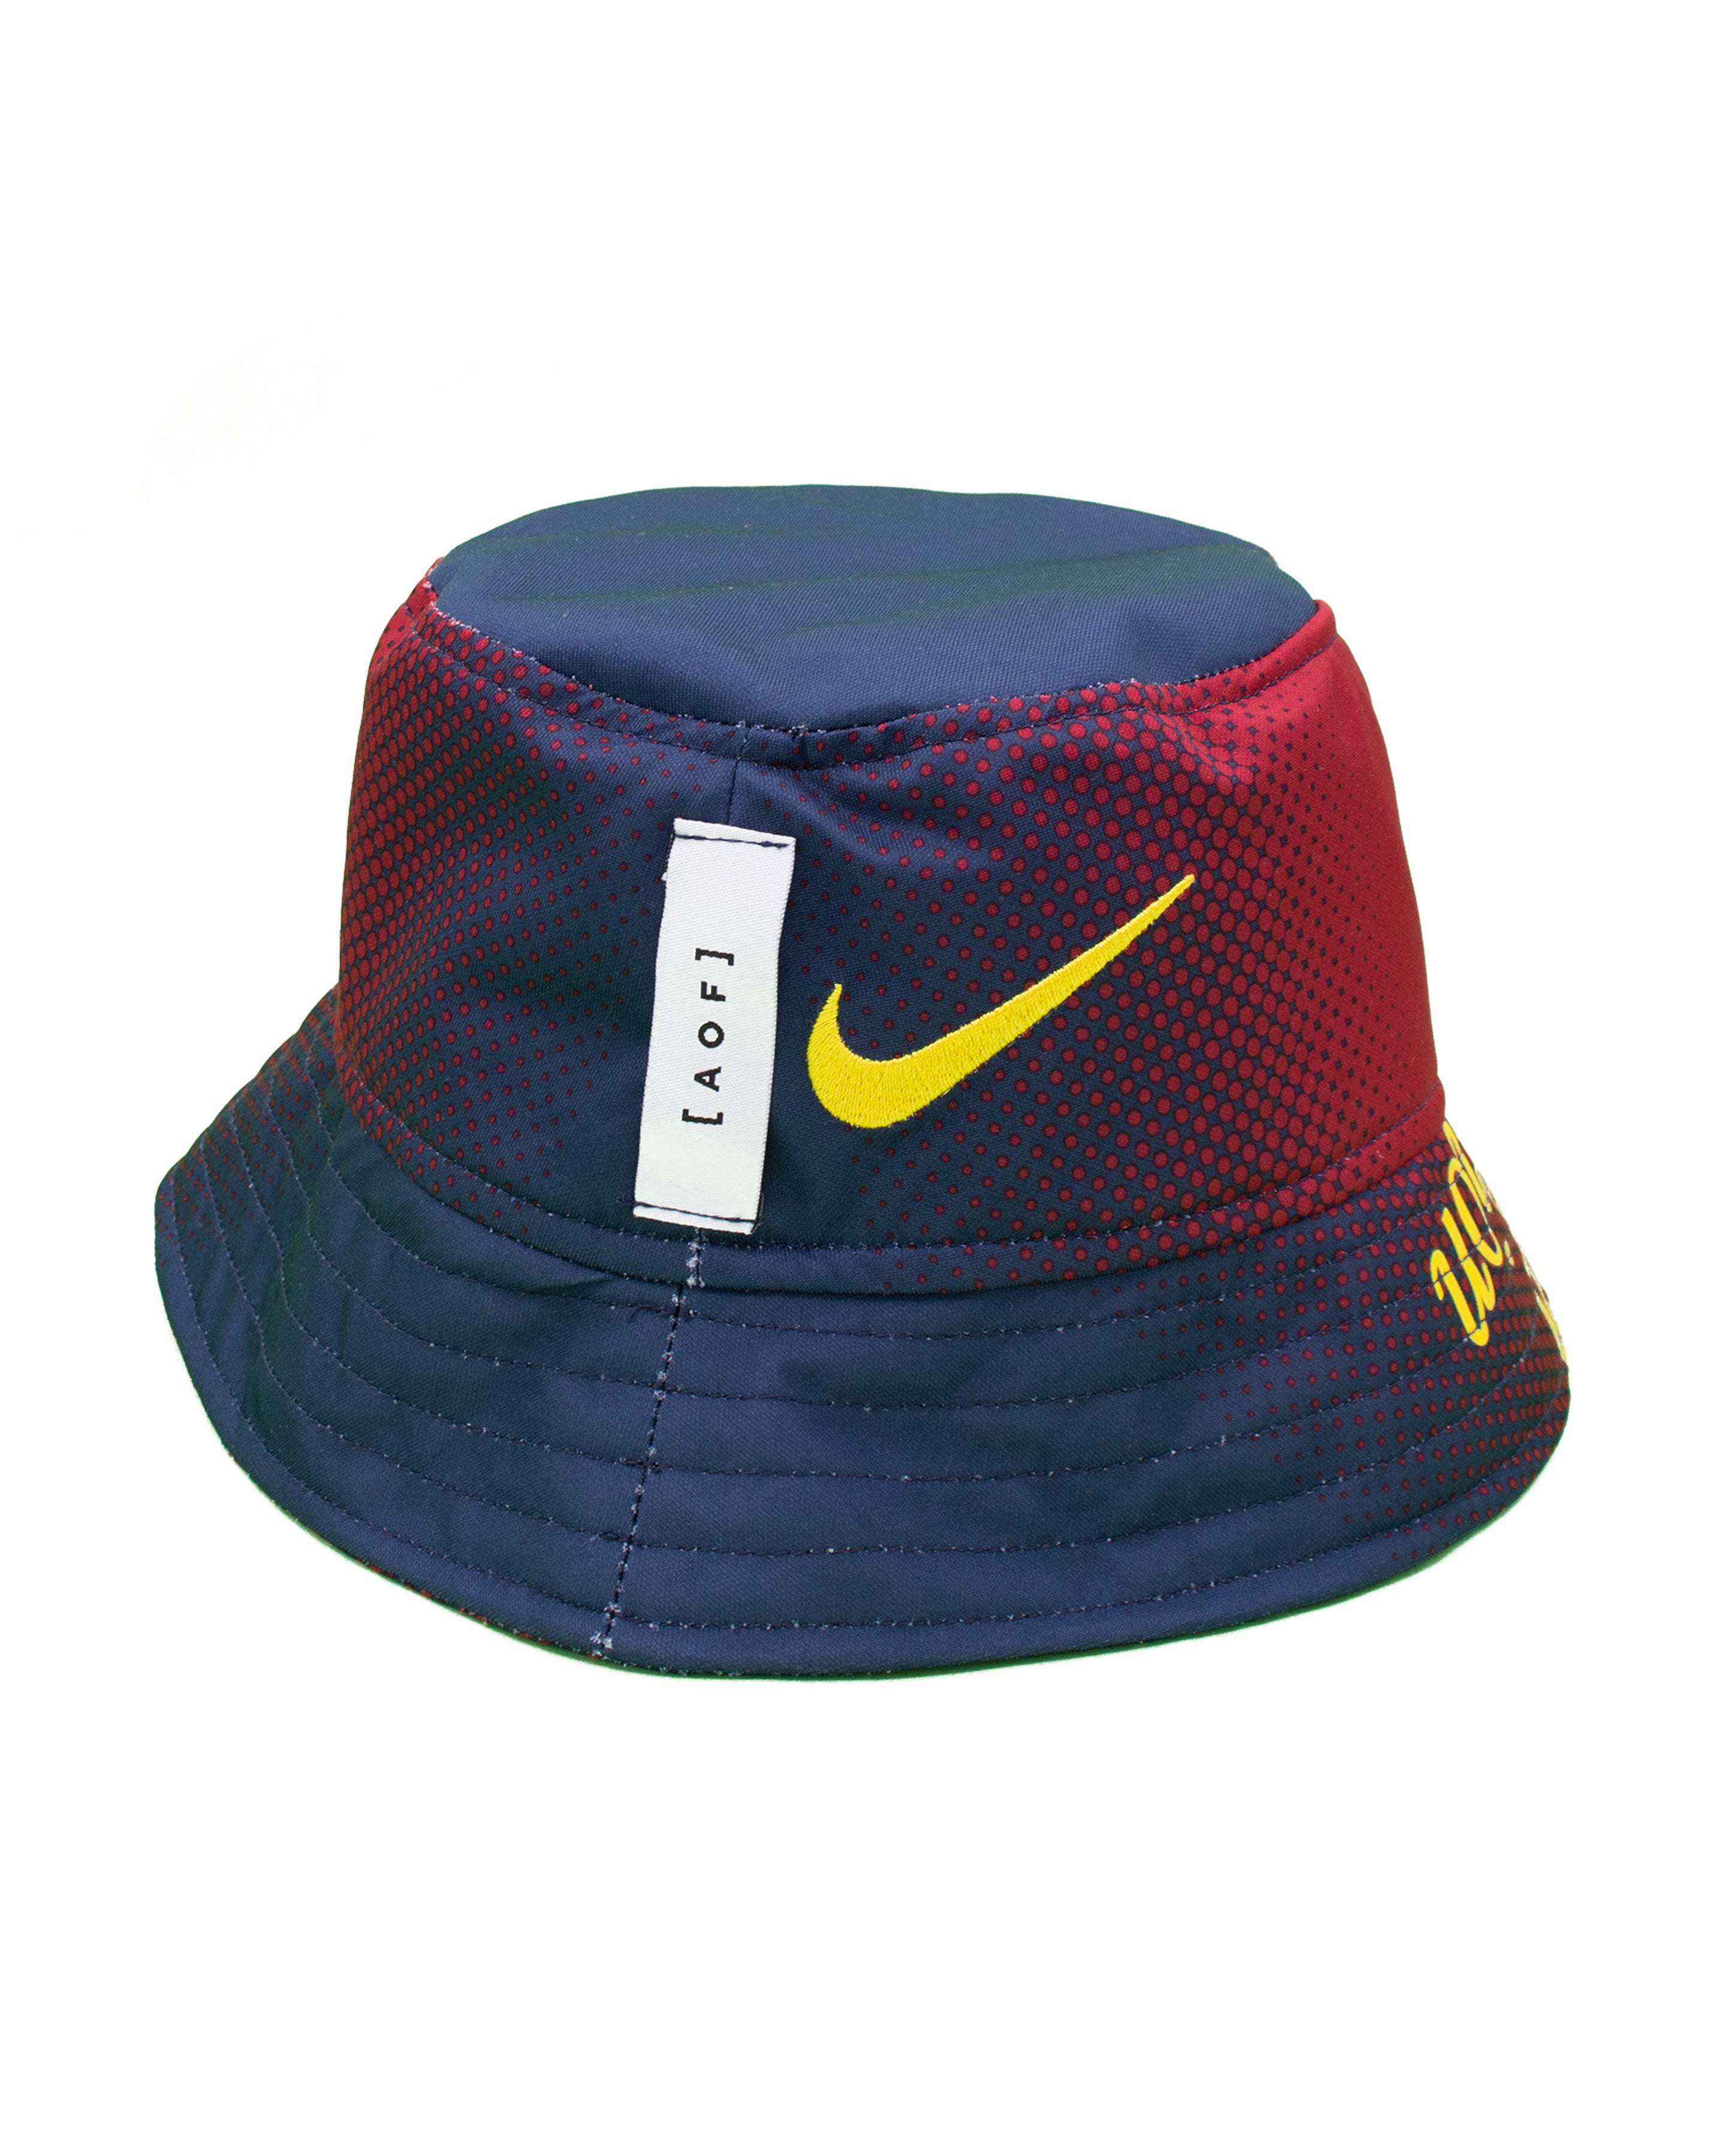 Barcelona Reworked Bucket Hat - #1167